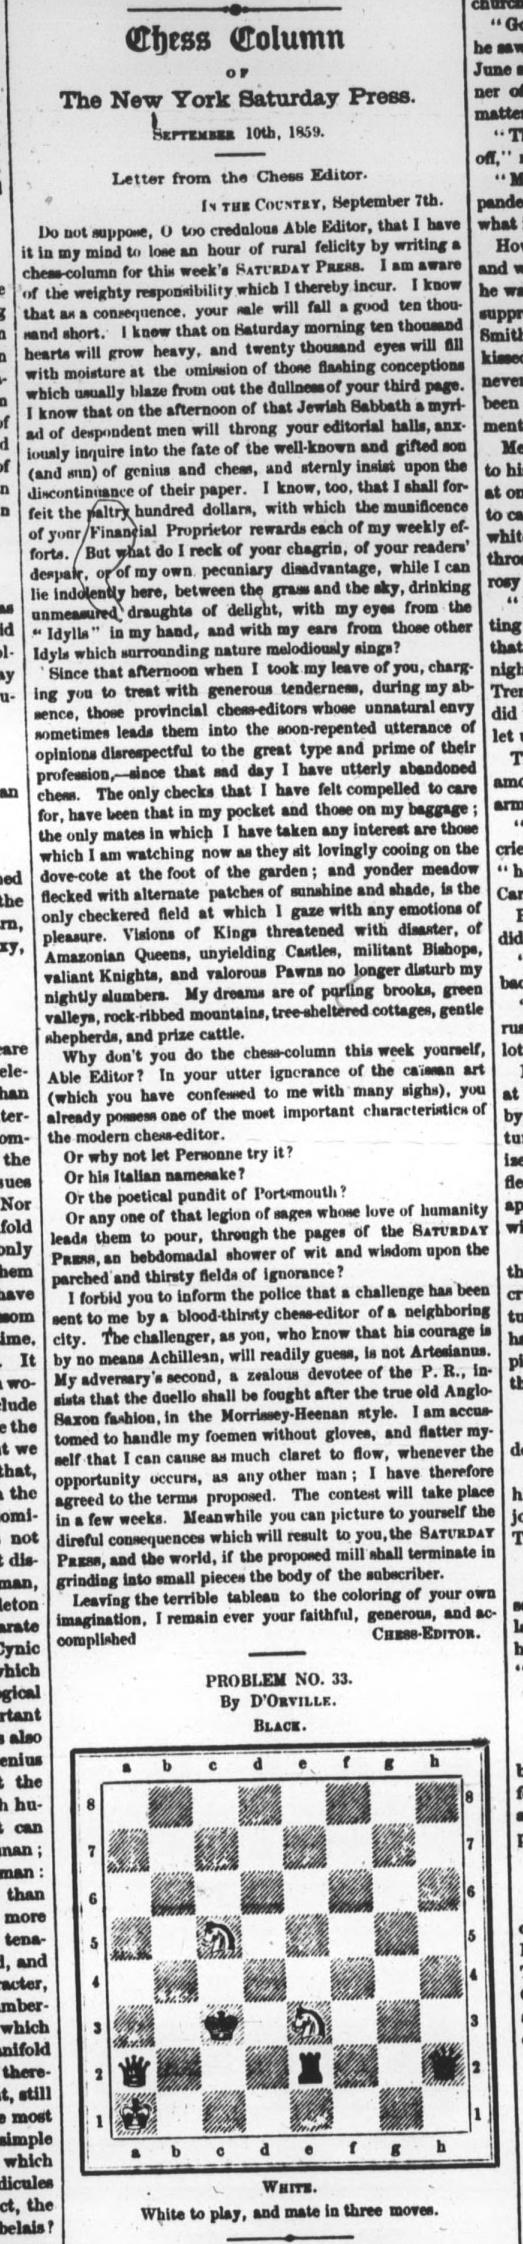 1859.09.10-01 New York Saturday Press.jpg